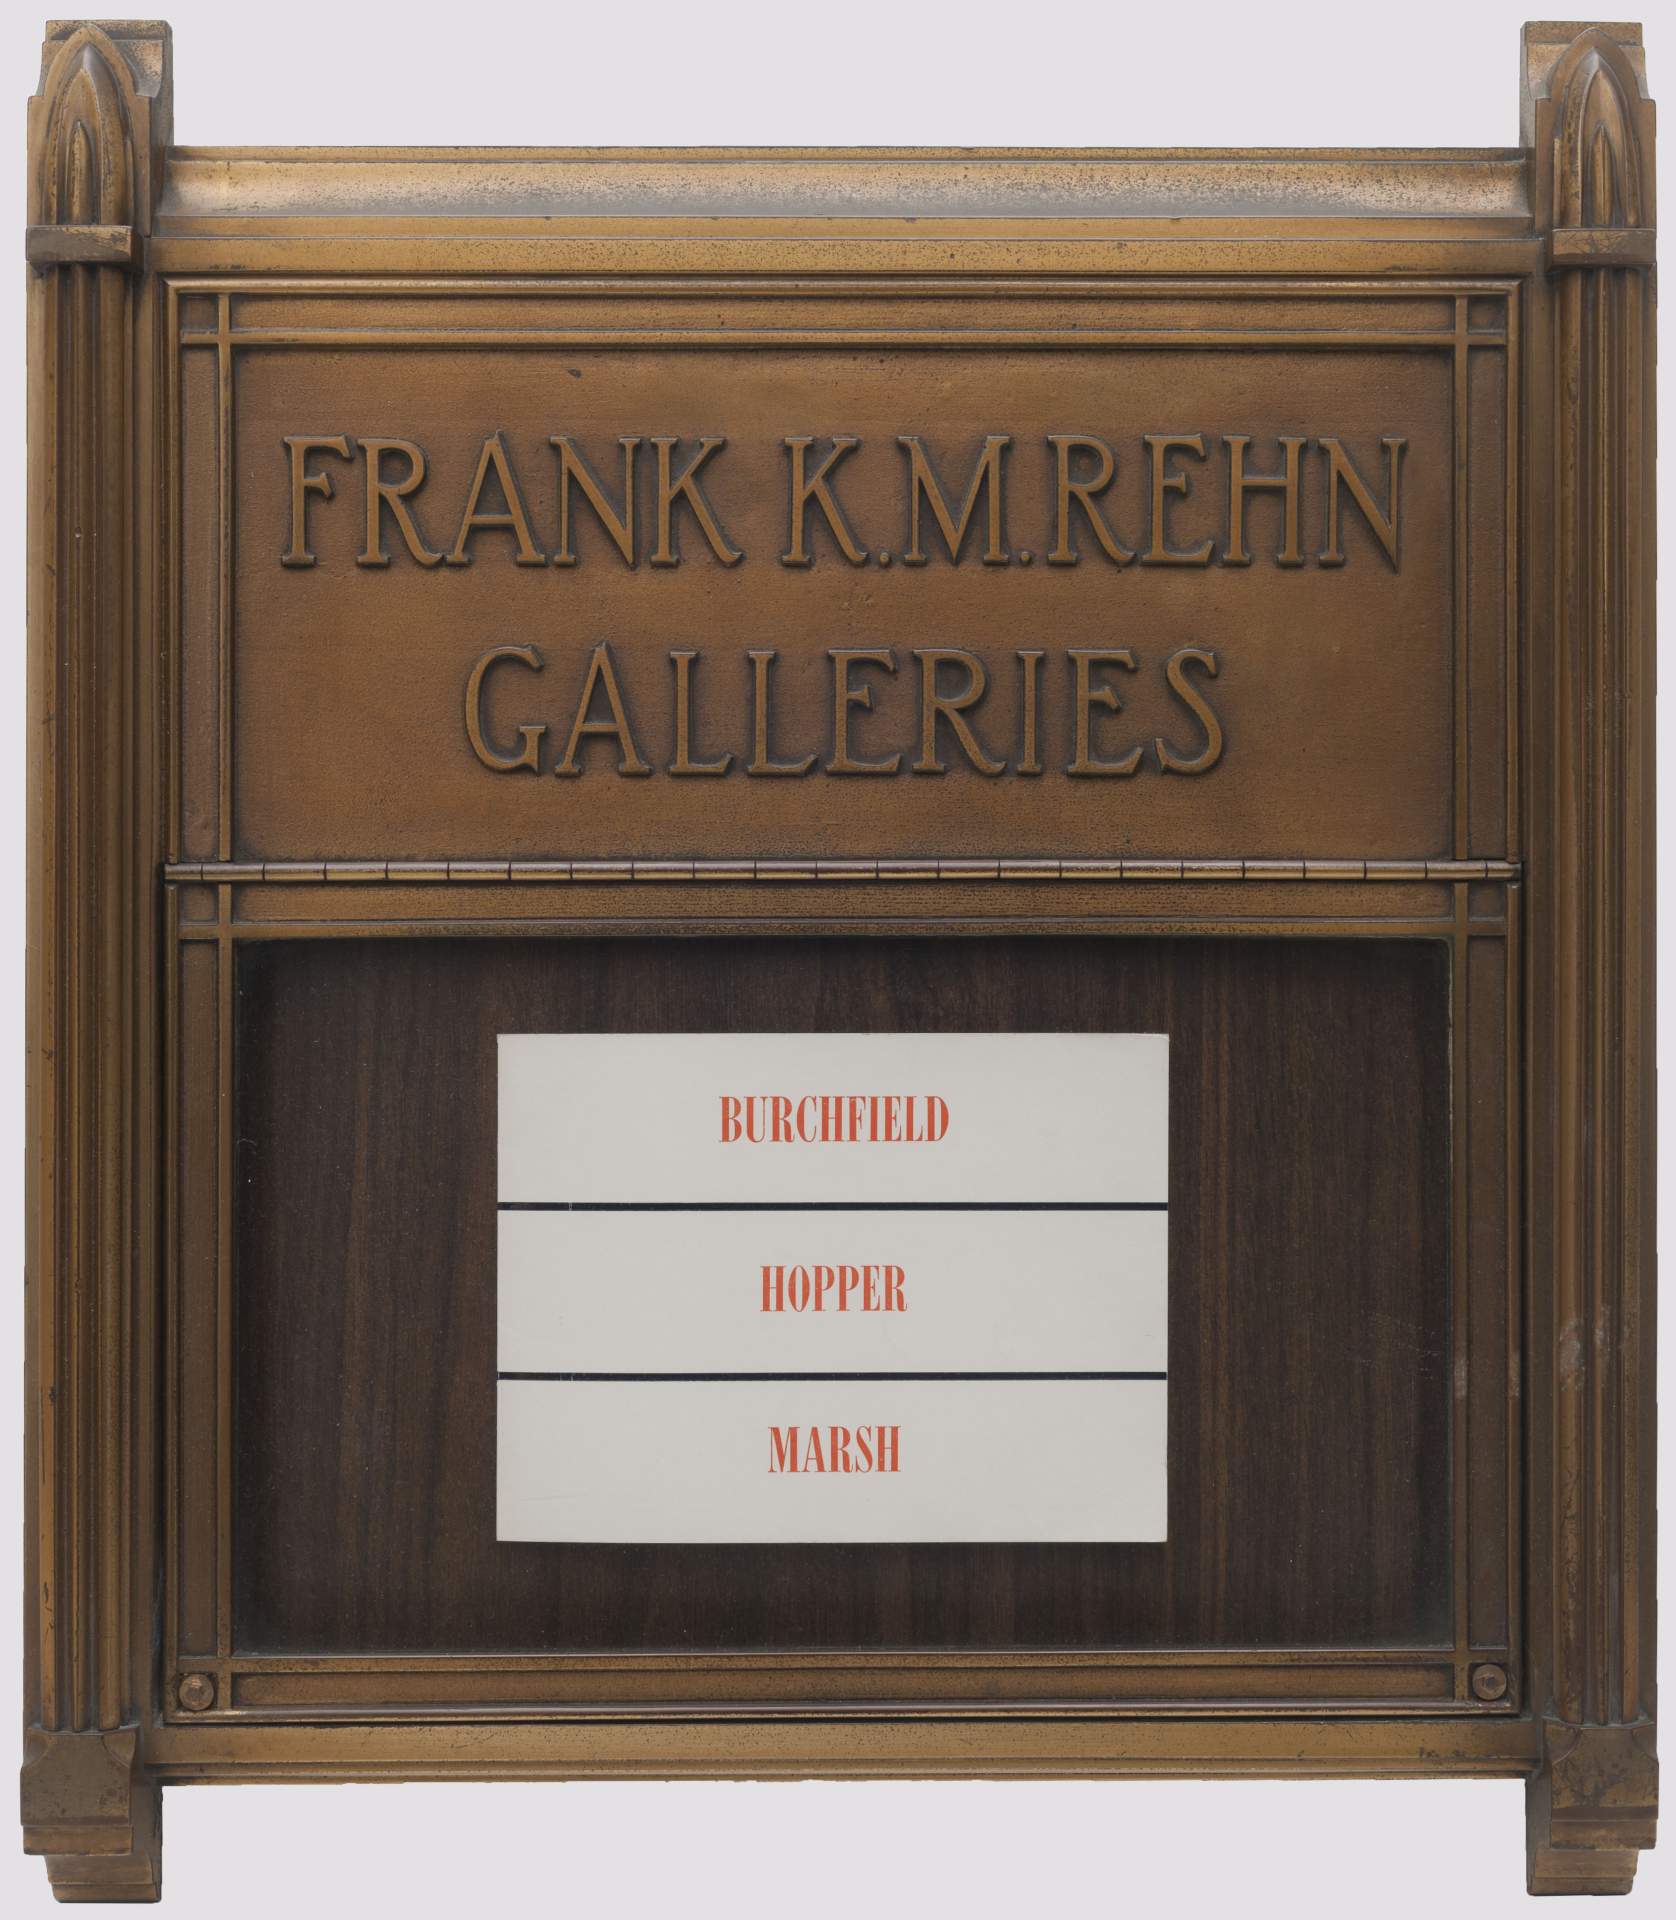 Frank K. M. Rehn Galleries Display Sign